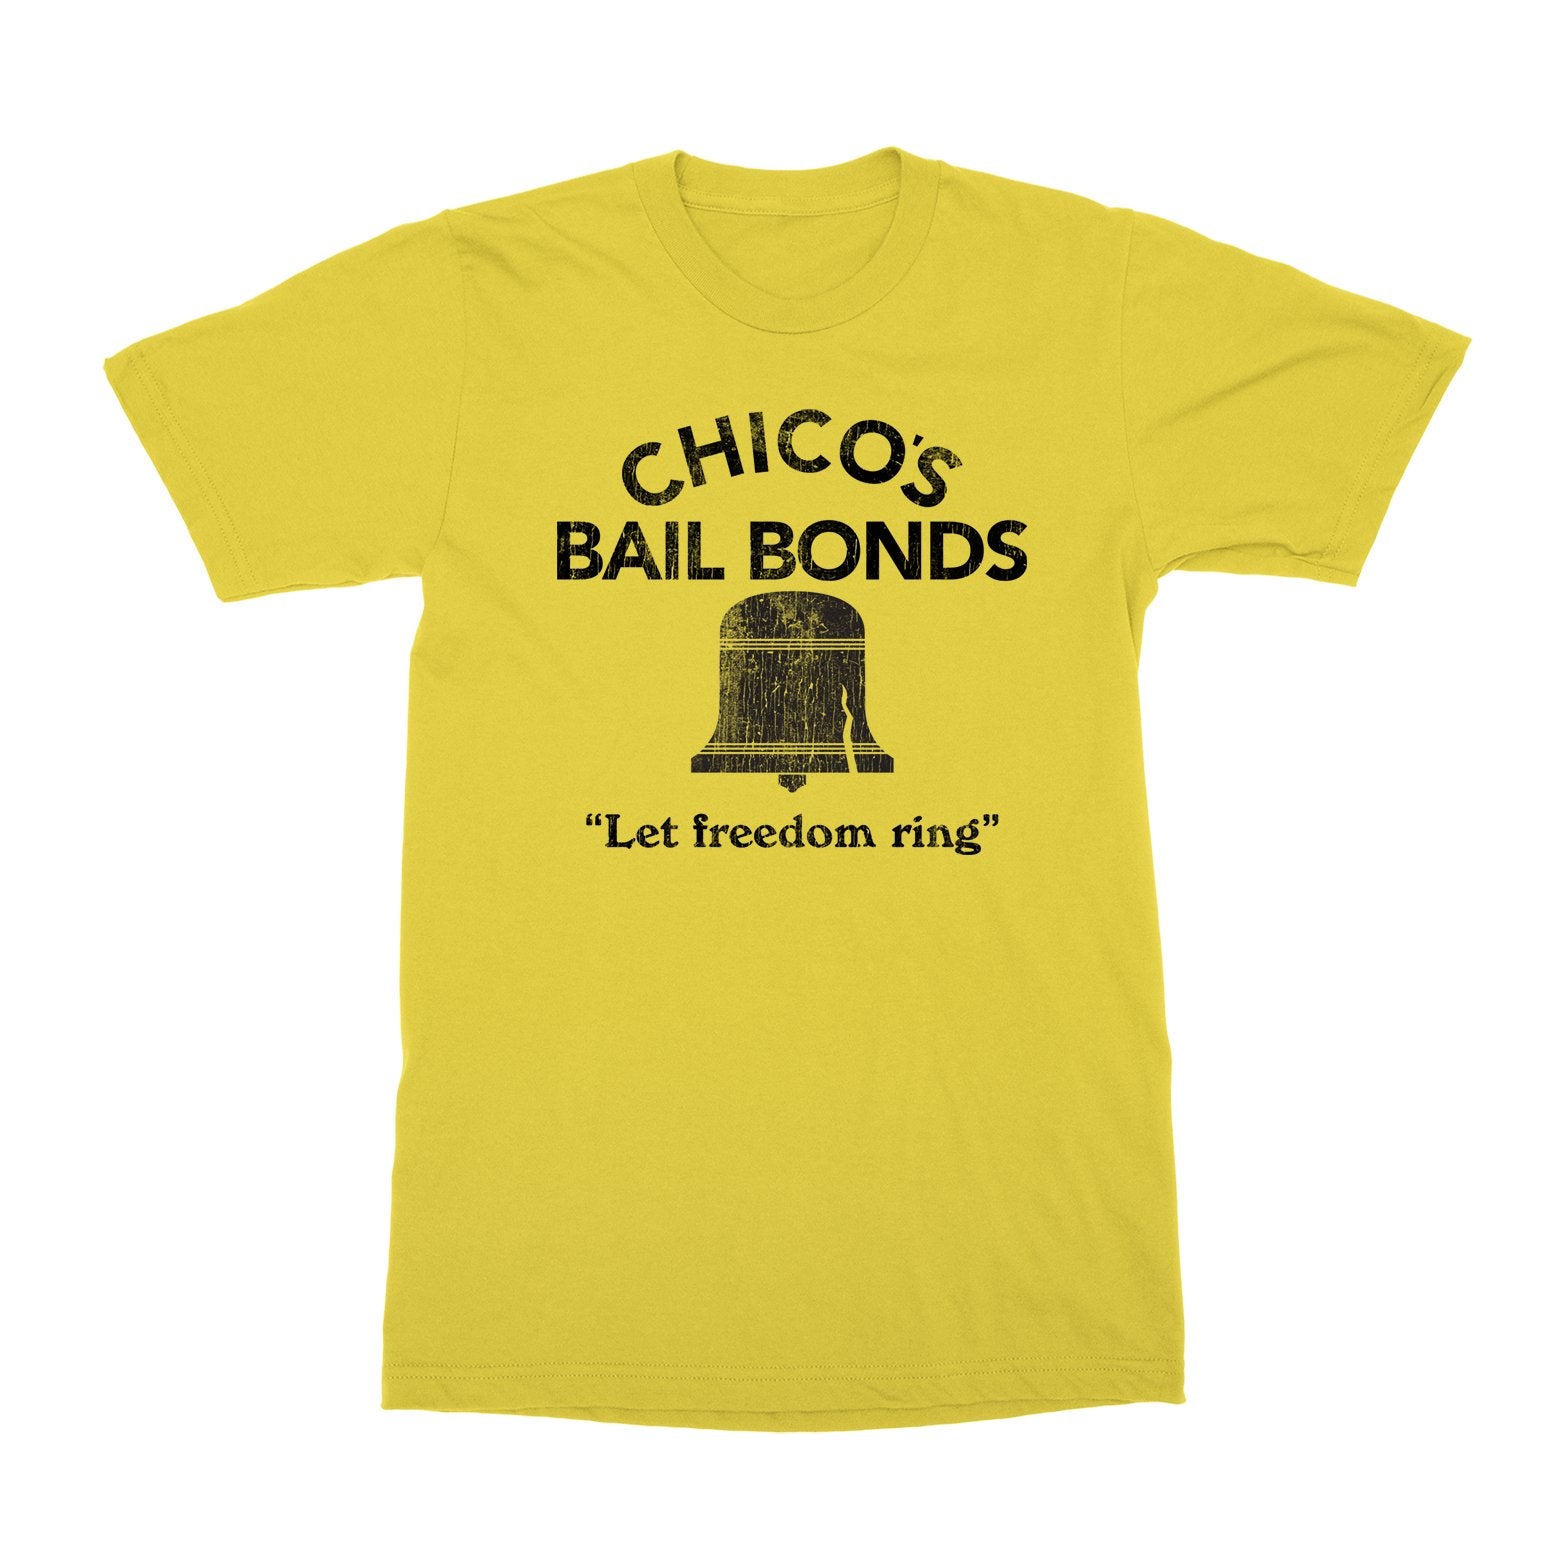 Chicos Bail Bonds T-Shirt - Black Cat MFG -